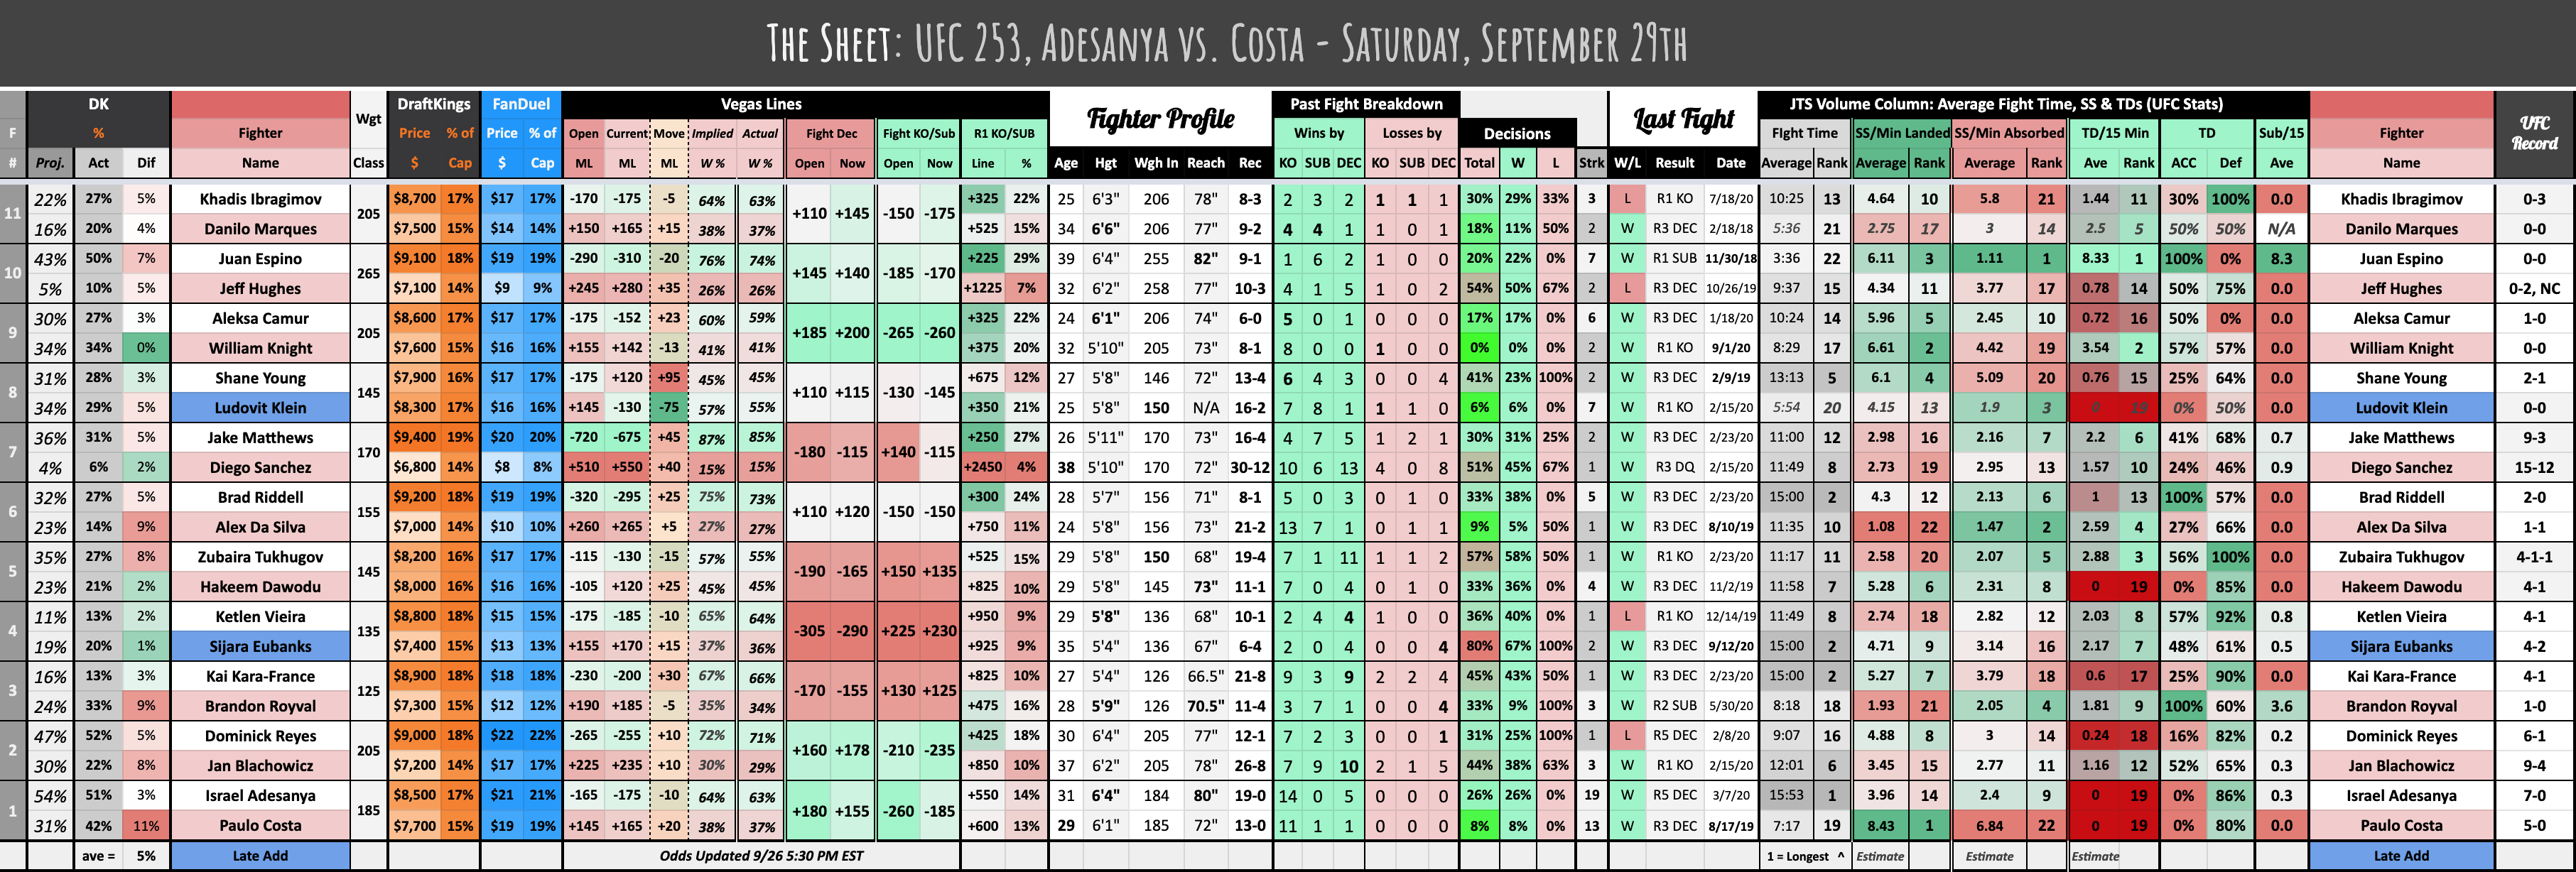 The Sheet: UFC 253, Adesanya vs. Costa - Saturday, September 26th